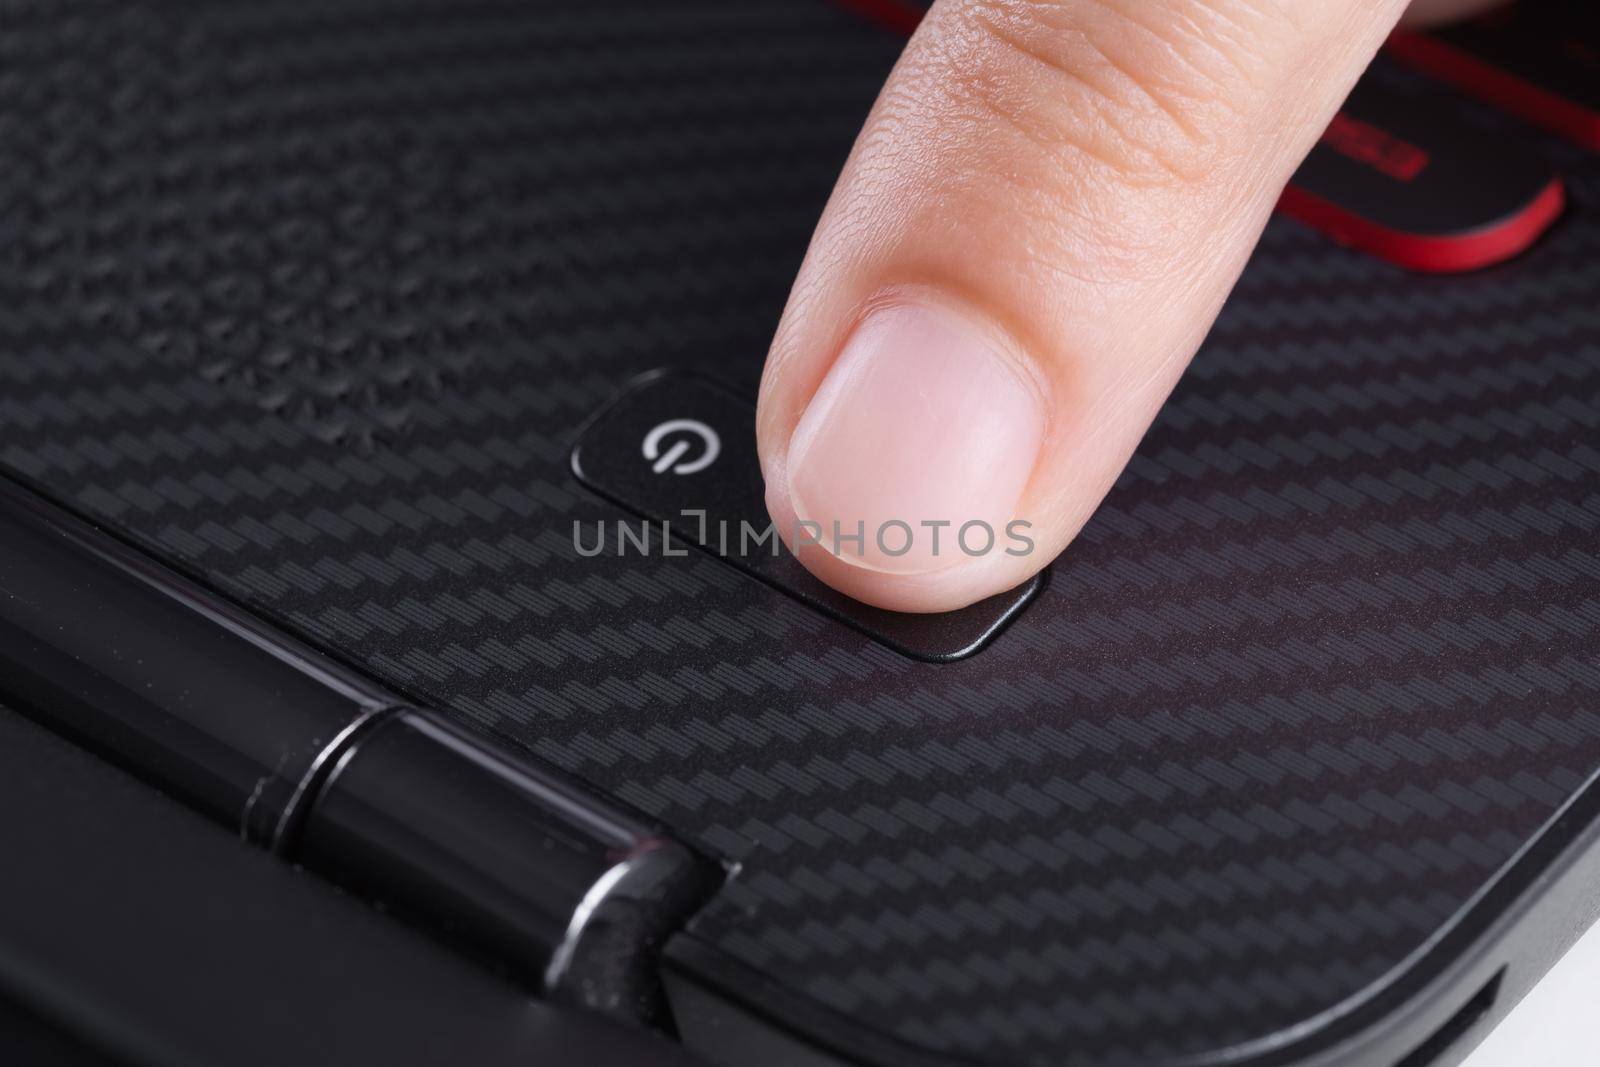 finger pushing power button on a laptop keyboard